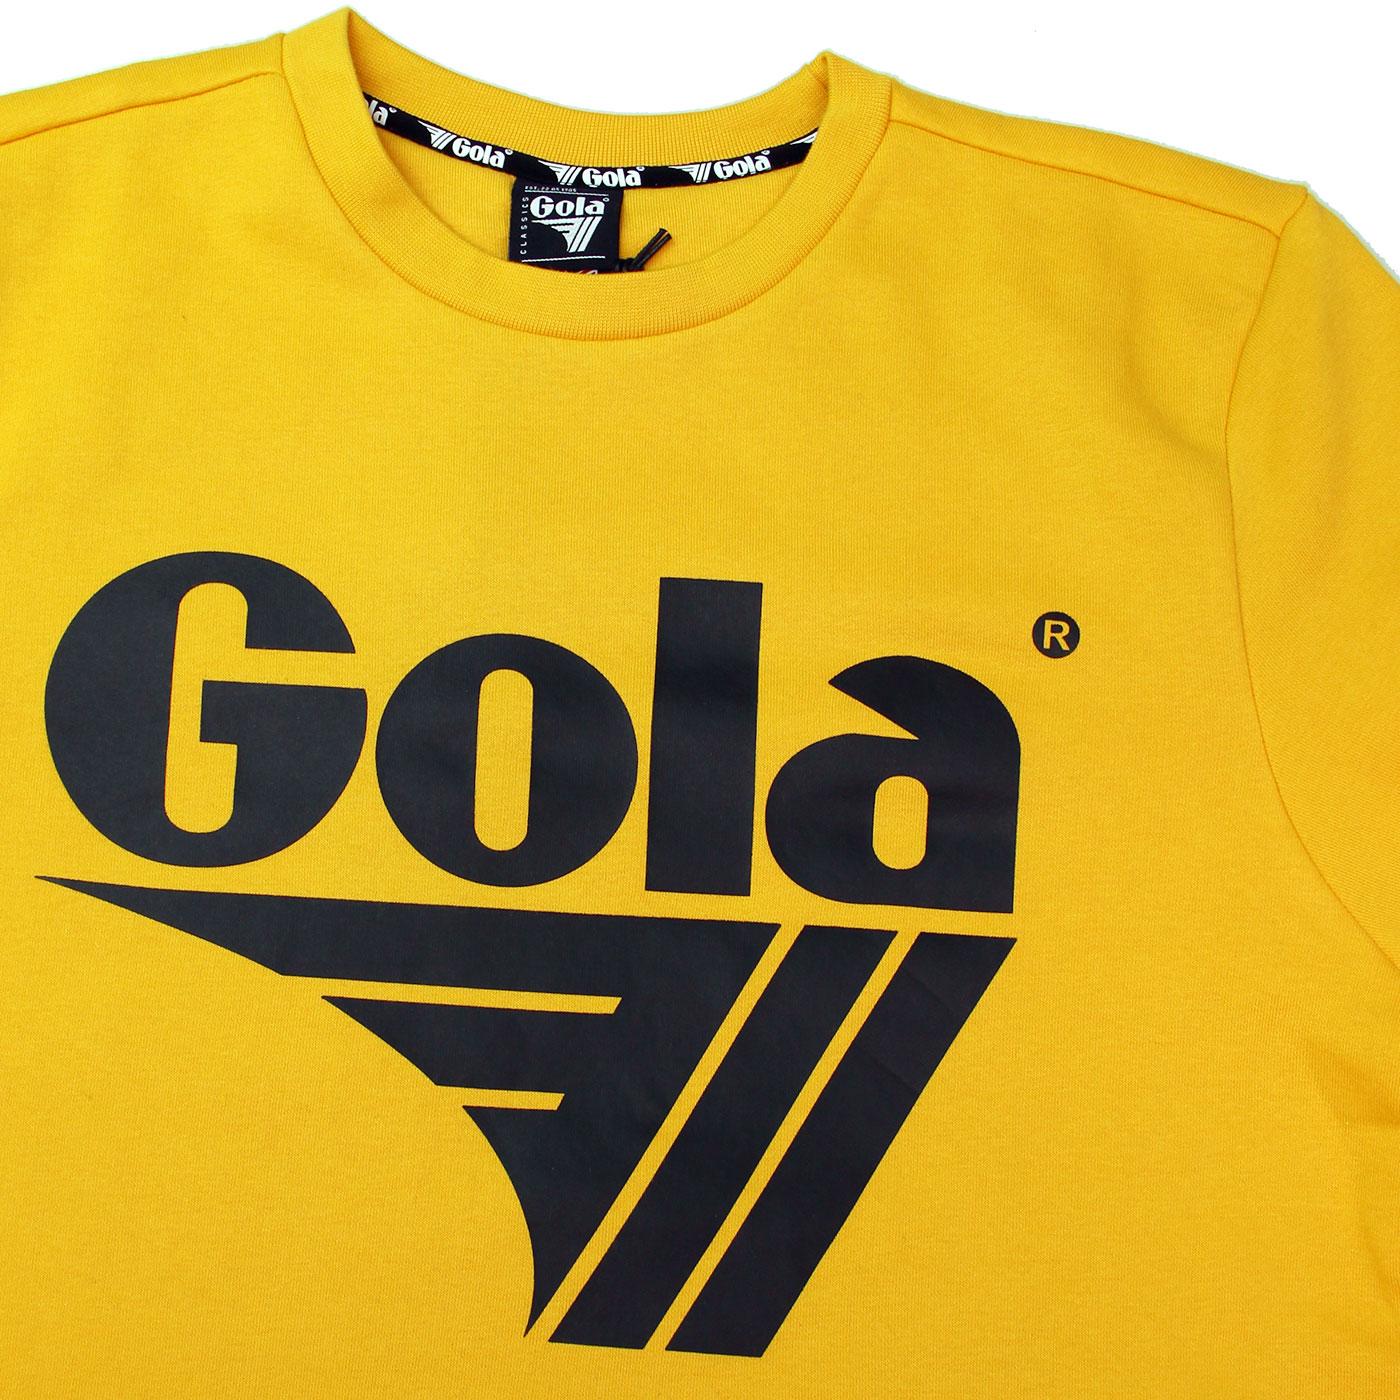 Bell GOLA CLASSICS Retro 80's Logo Sweatshirt GOLD